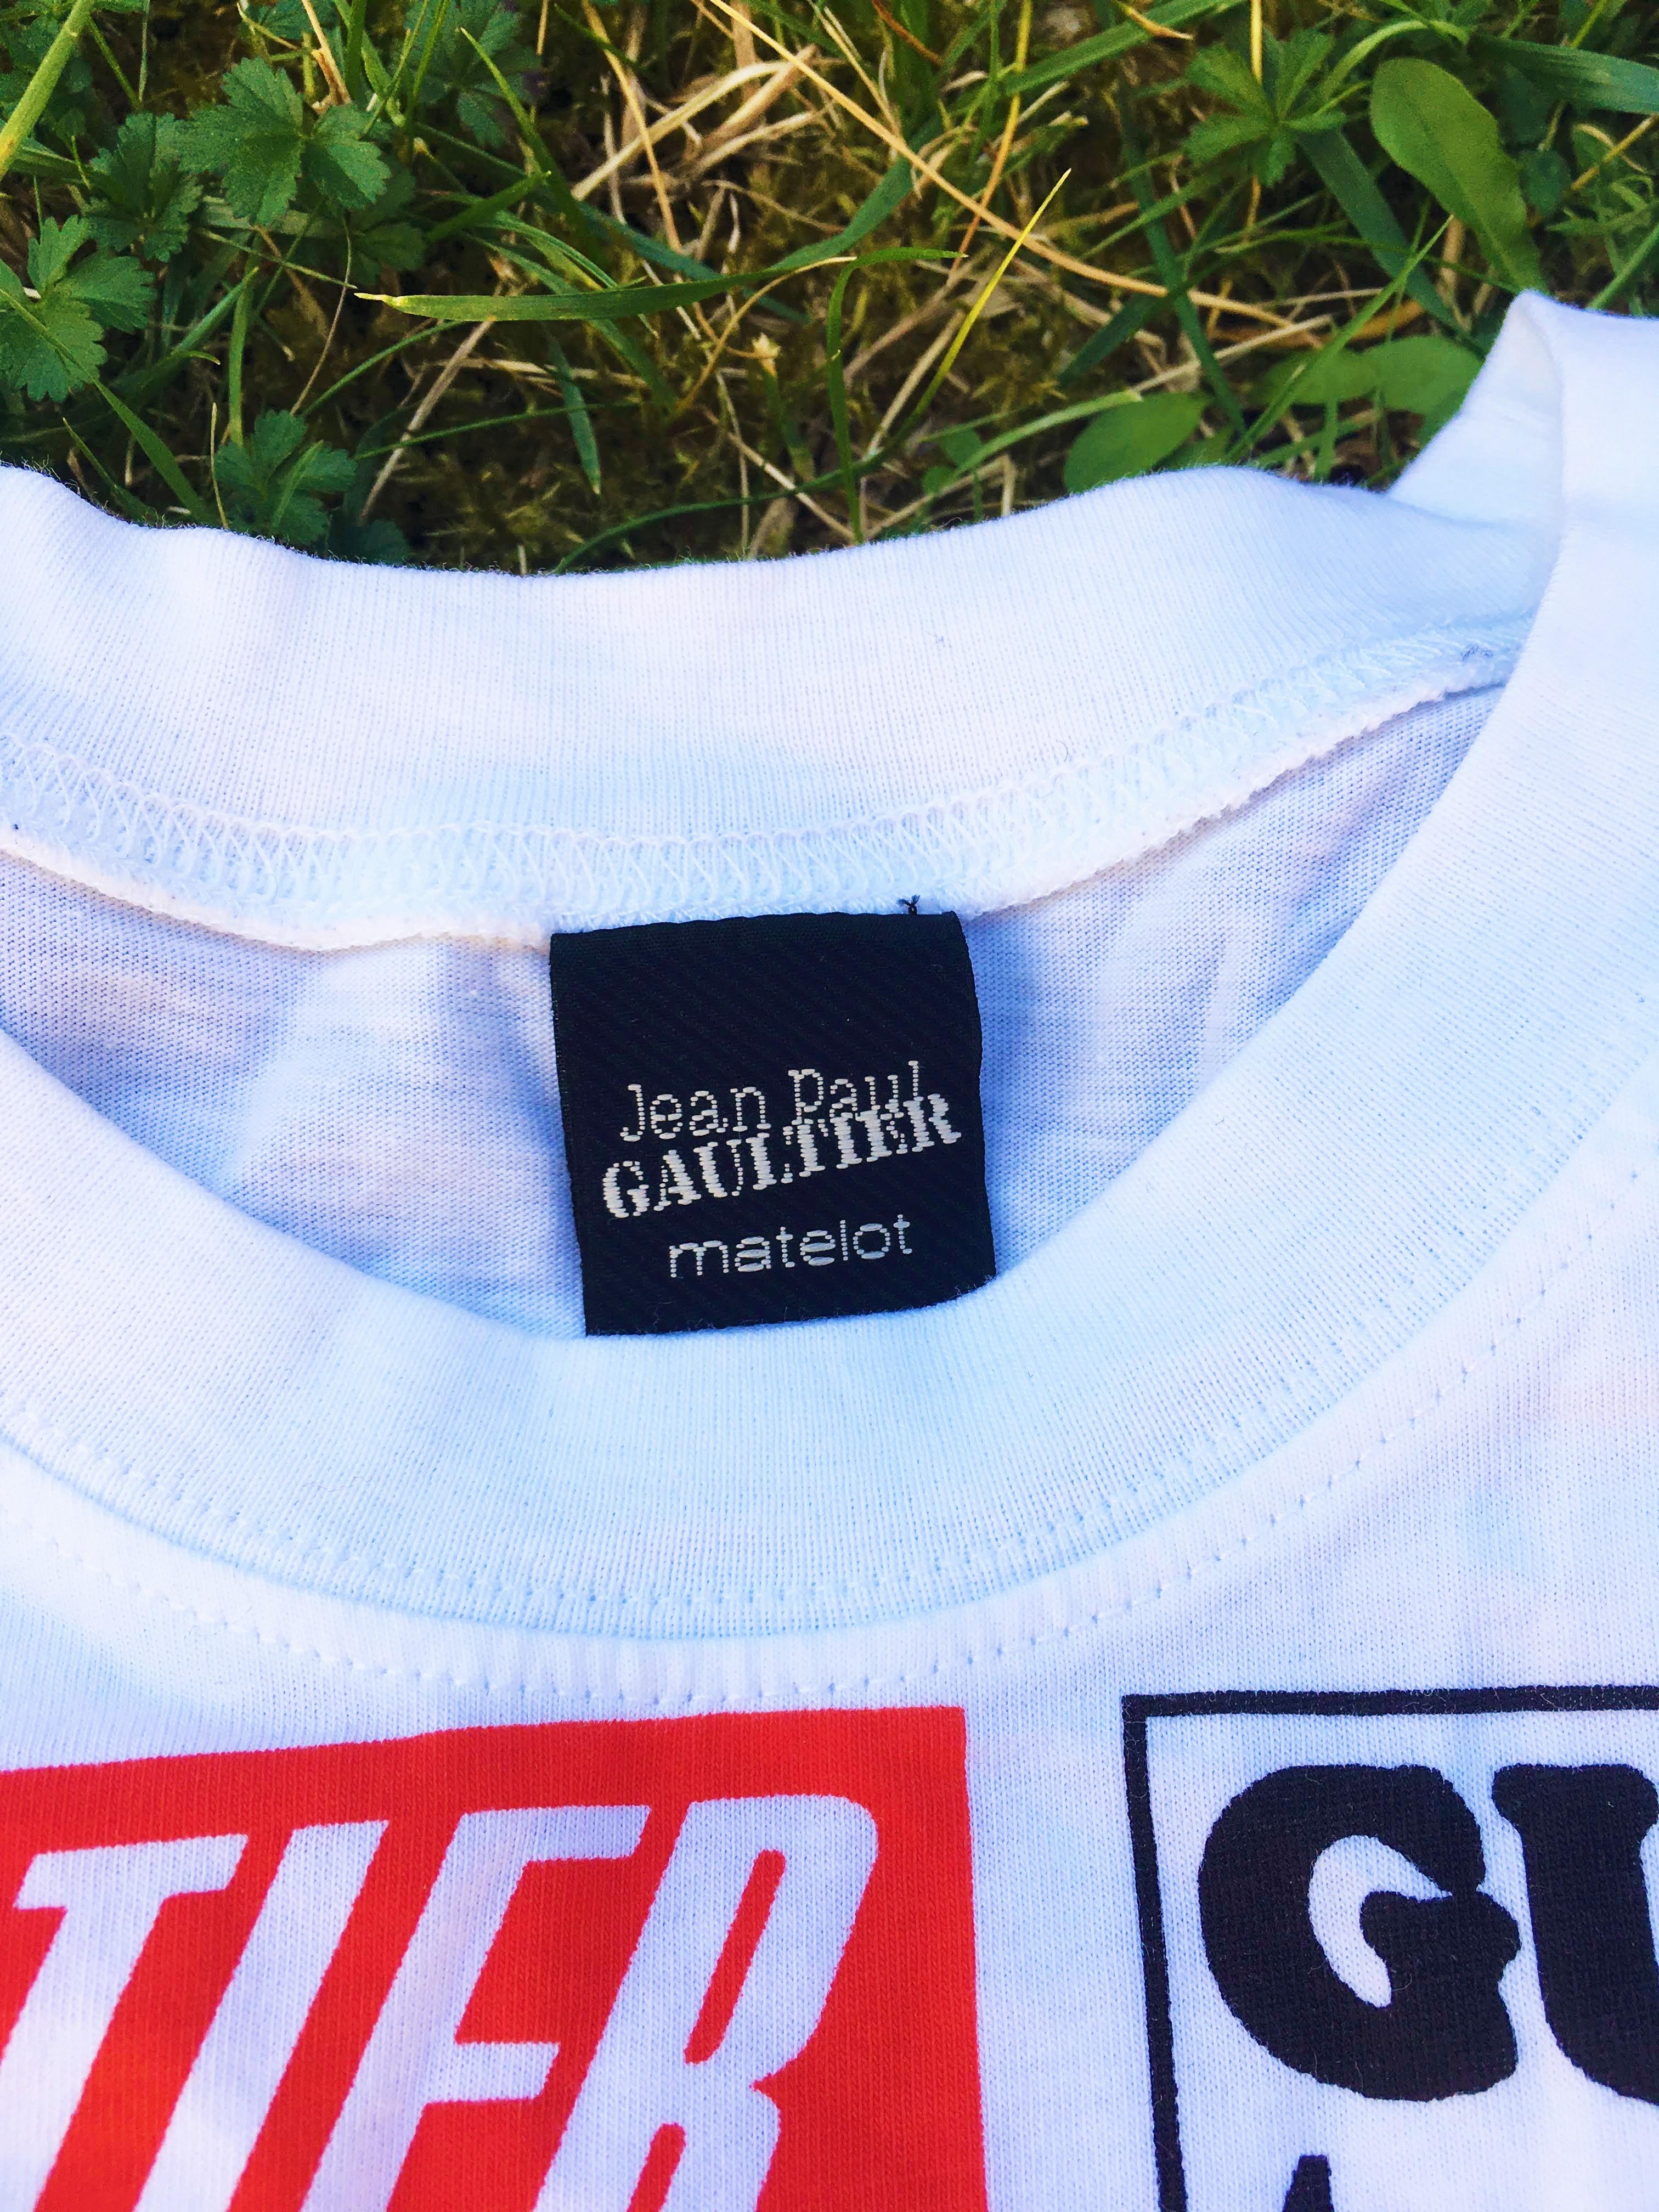 Jean Paul Gaultier Virus Newspaper Gigi Hadid Bella News Kardashian Top T-shirt For Sale 2